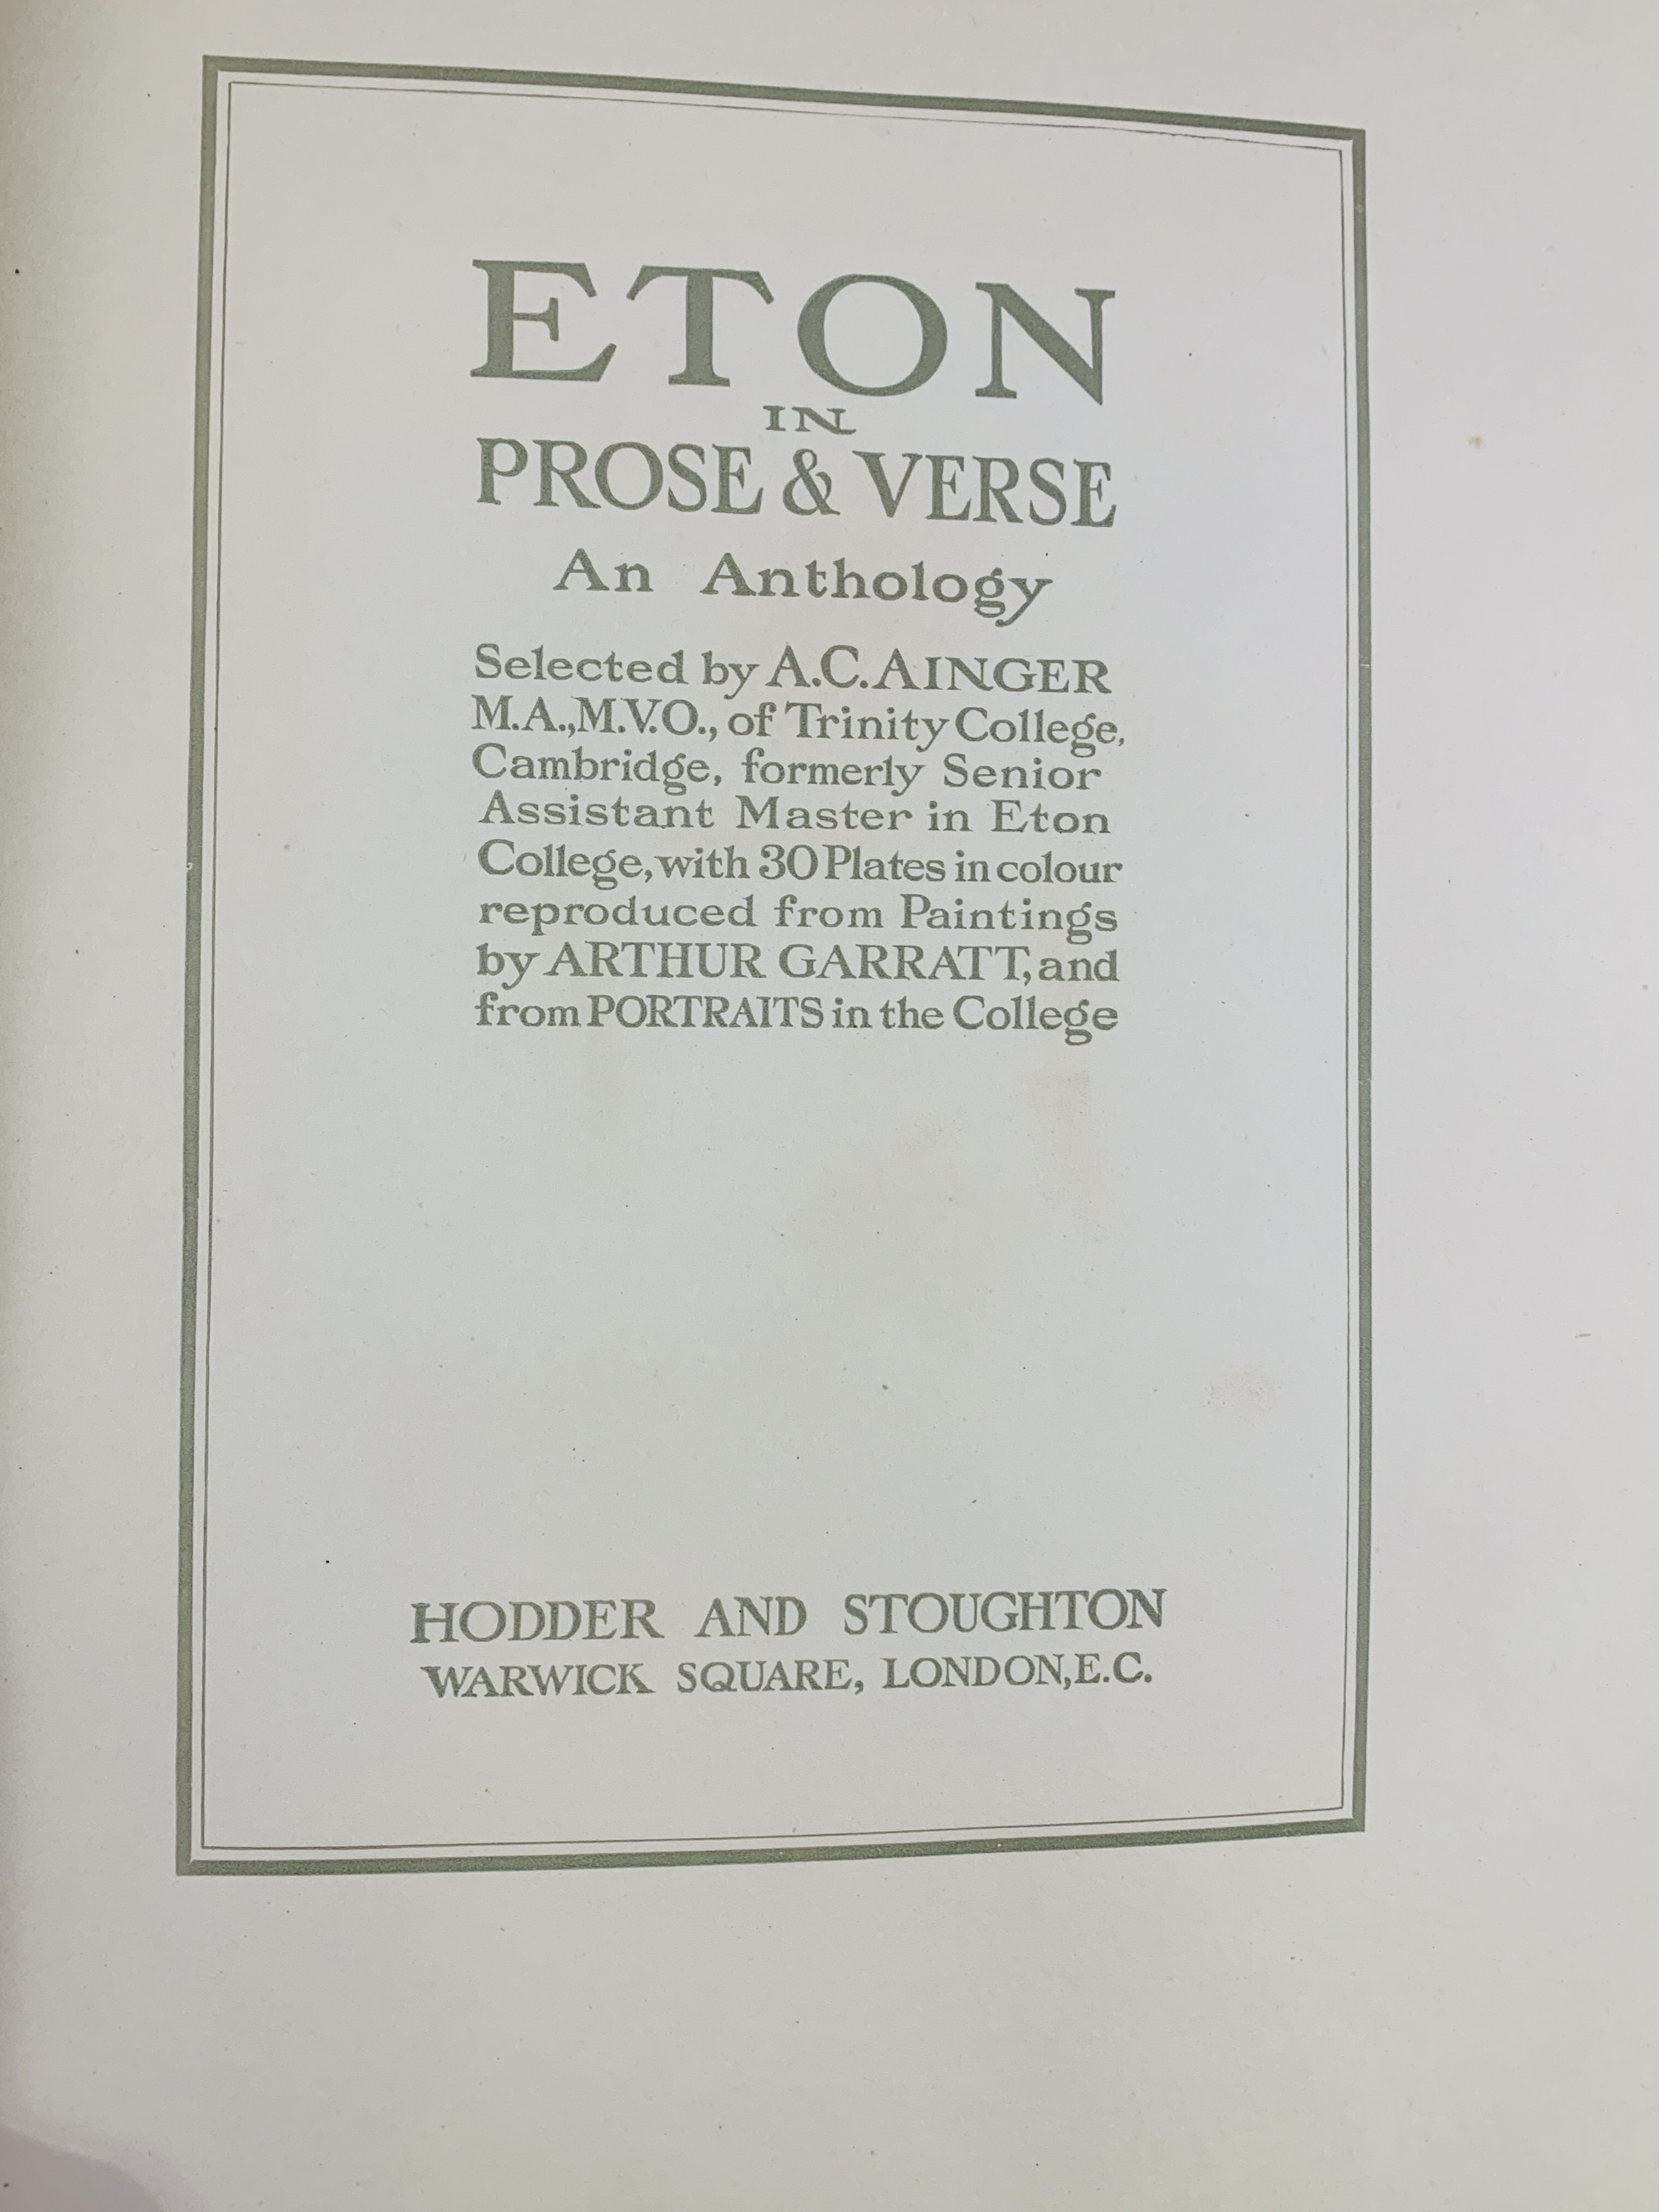 Eton College Chronicle, 1906-1911, Eton An Anthology, and Eton College by Hussey - Image 3 of 5